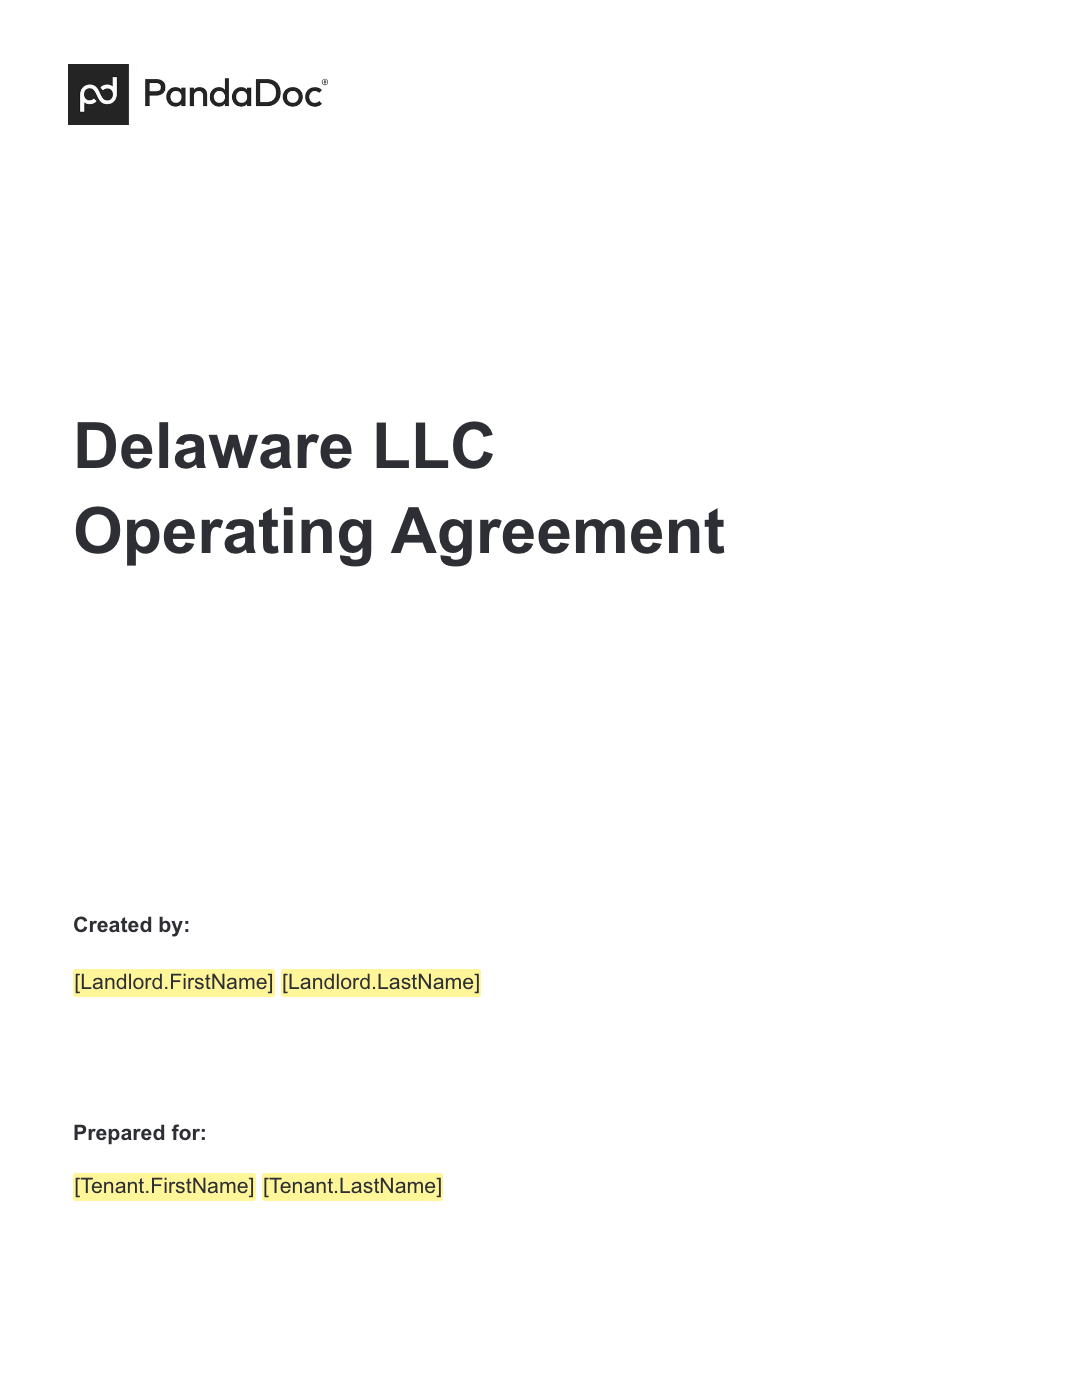 Delaware LLC Operating Agreement 